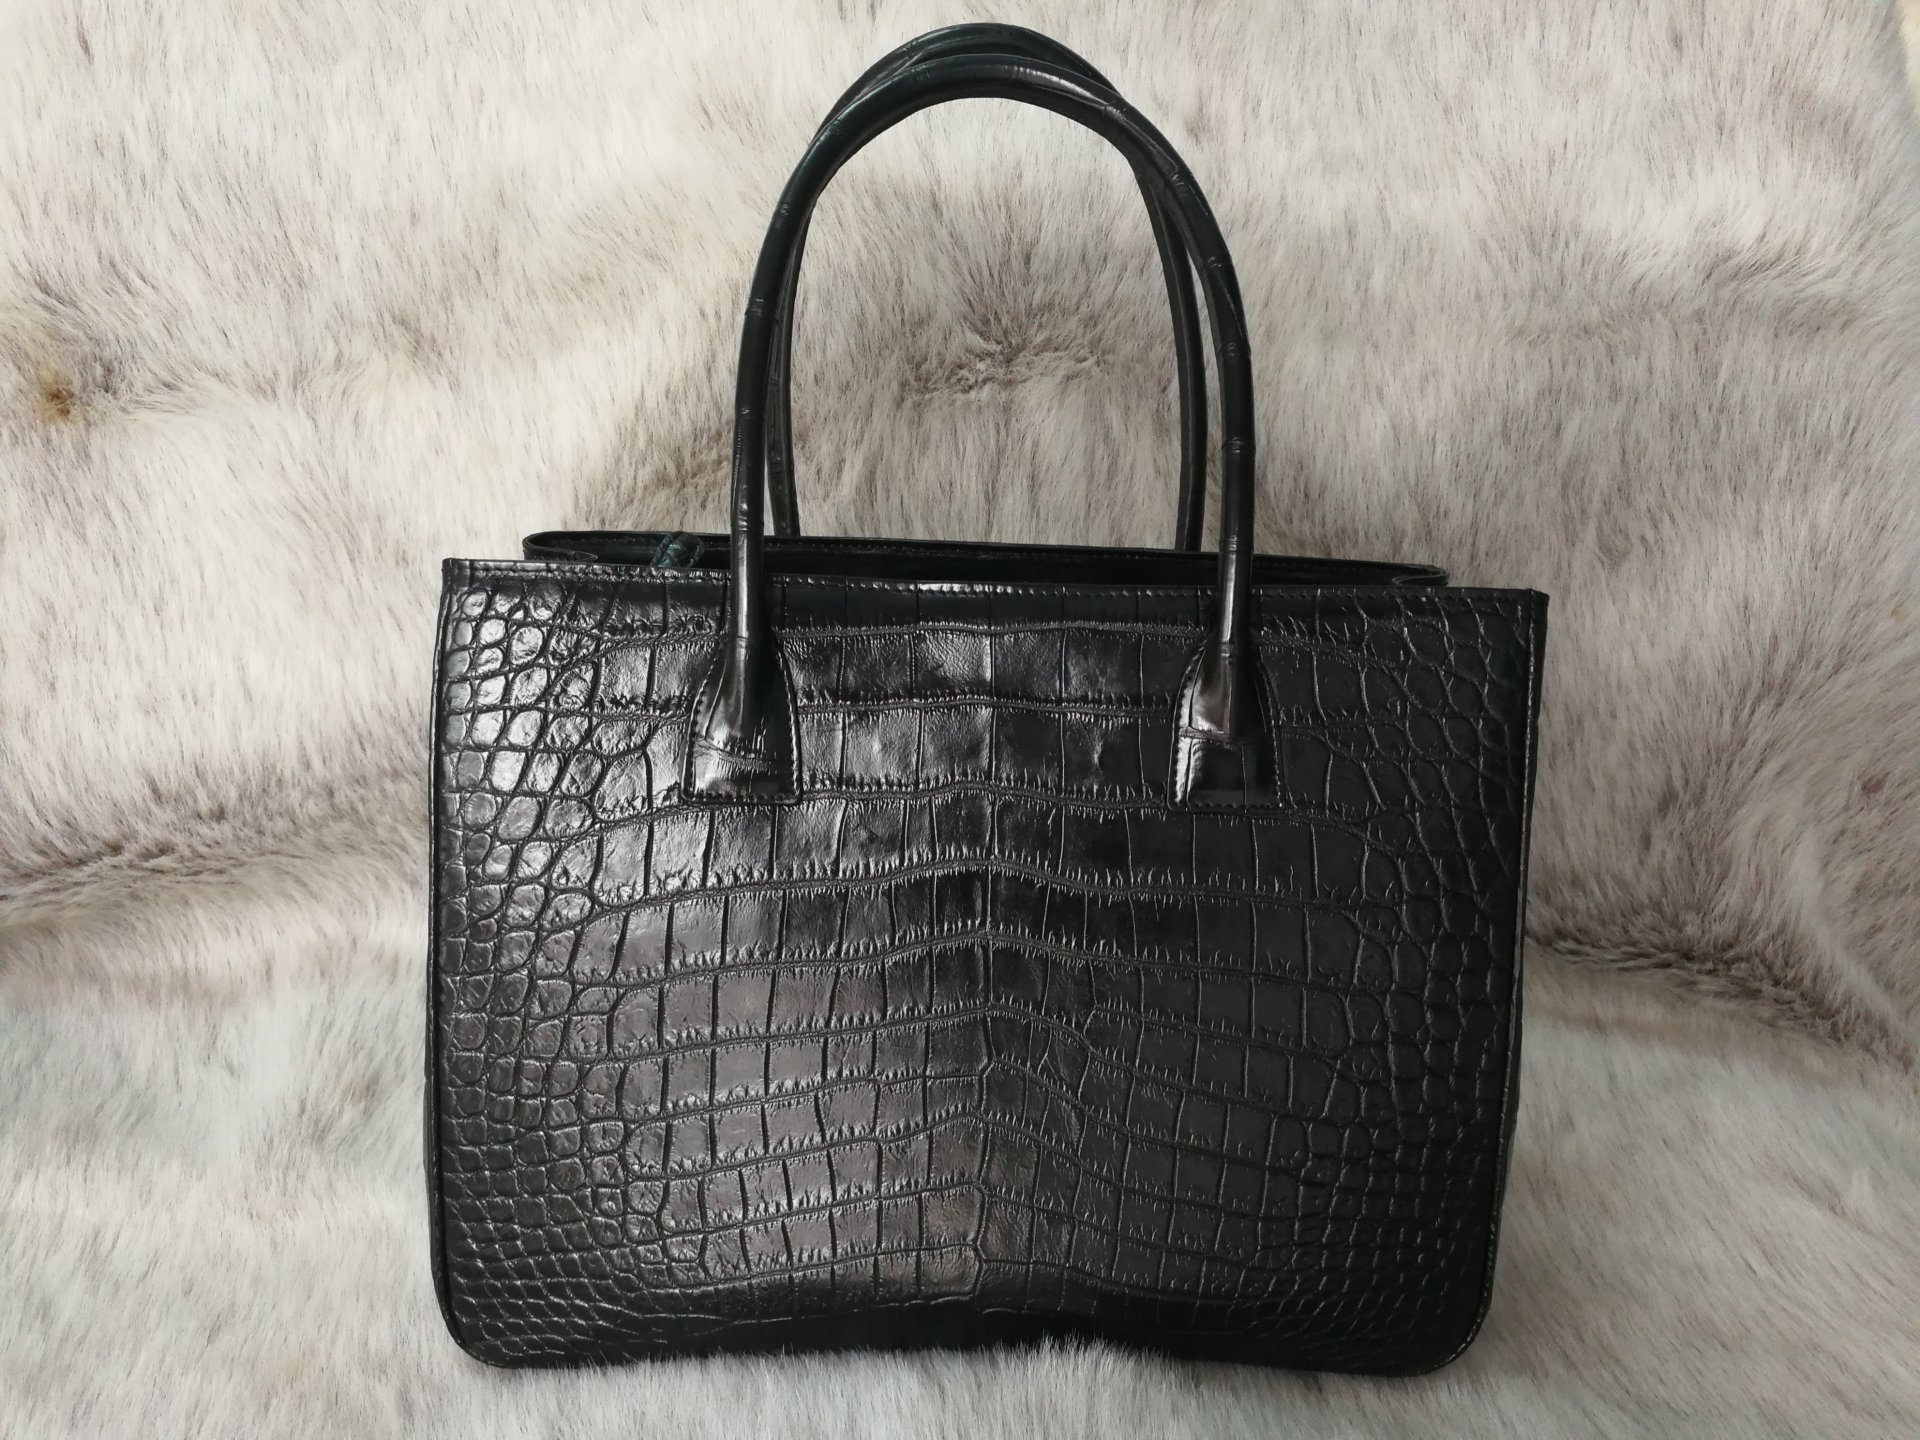 New Women's Bag Crocodile Pattern Shoulder Bag Handbags Fashion Patent  Leather Underarm Bag Shoulder Bag Purses and Handbags - AliExpress